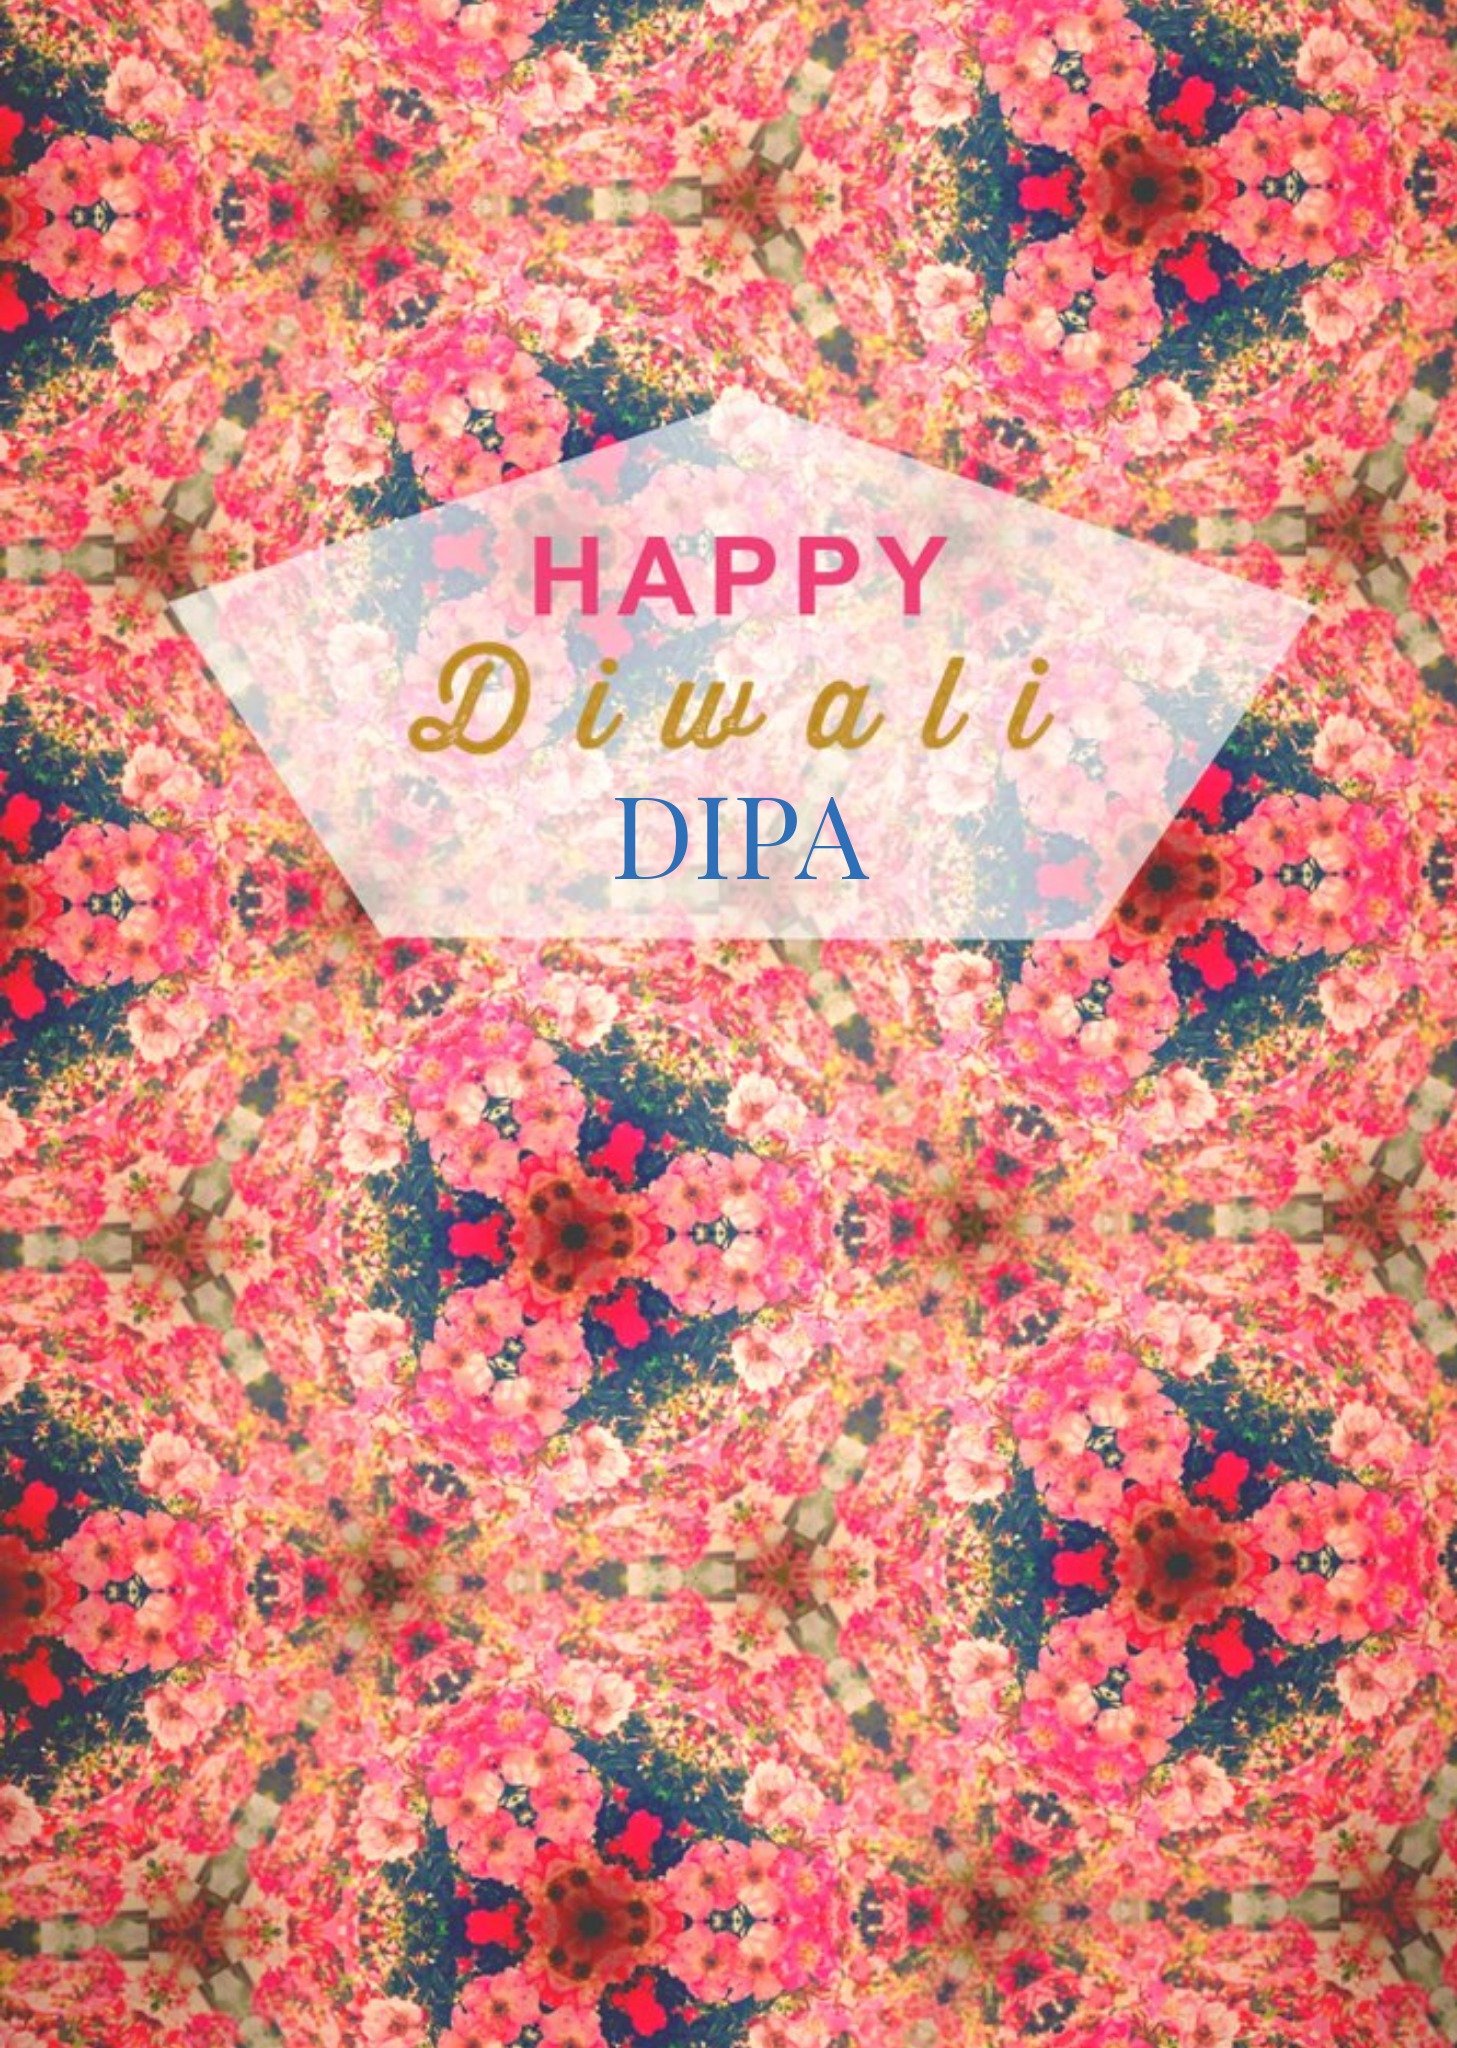 Moonpig Beautiful Dipa Personalised Happy Diwali Card, Large